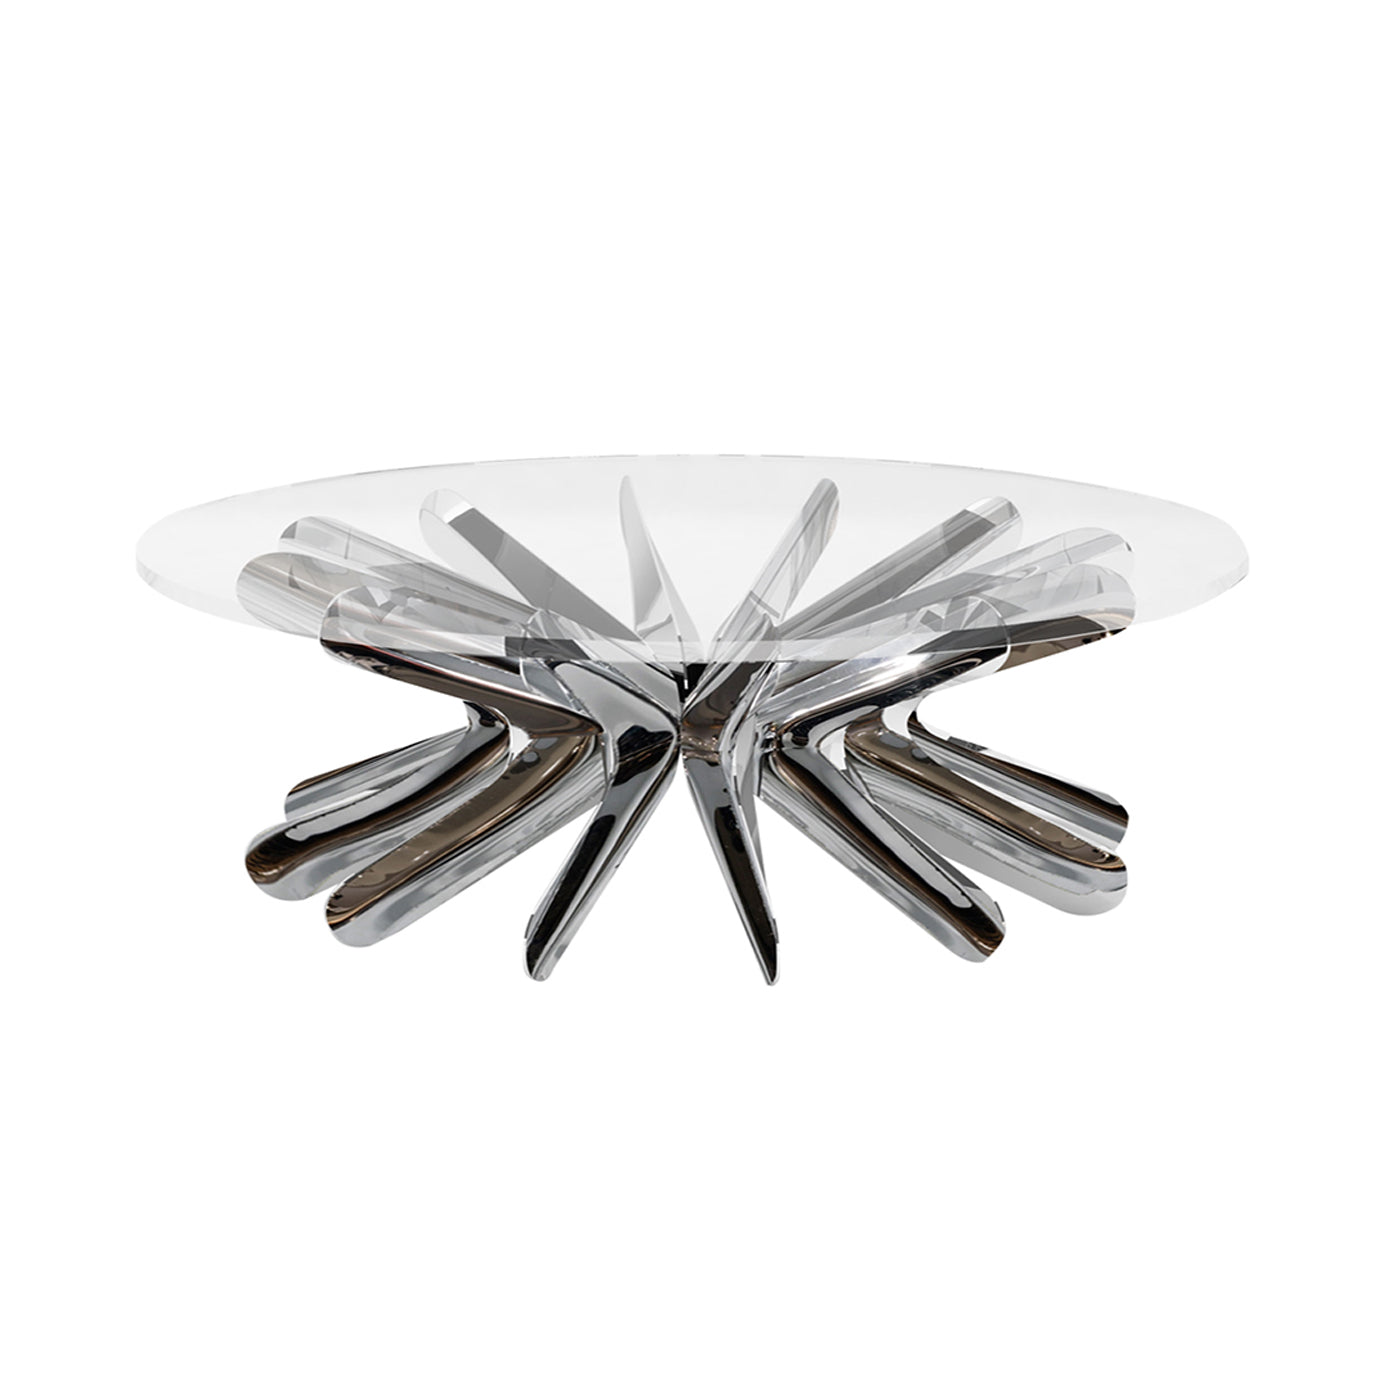 Steel in Rotation Coffee Table: Inox Polished Stainless Steel + Medium